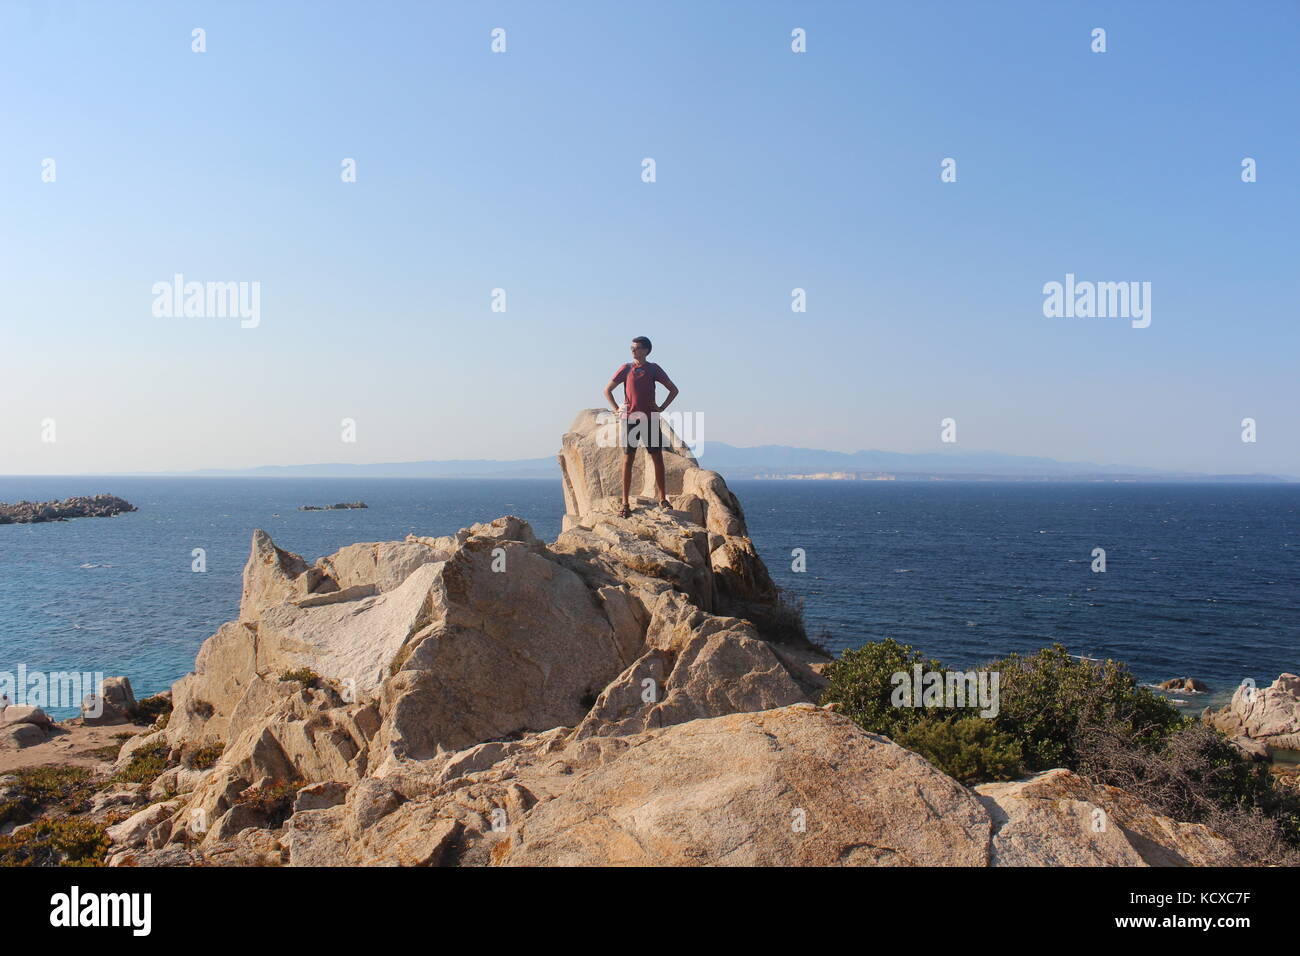 Point de vue falcone à Santa Teresa di Gallura, l'homme debout sur la roche. Banque D'Images